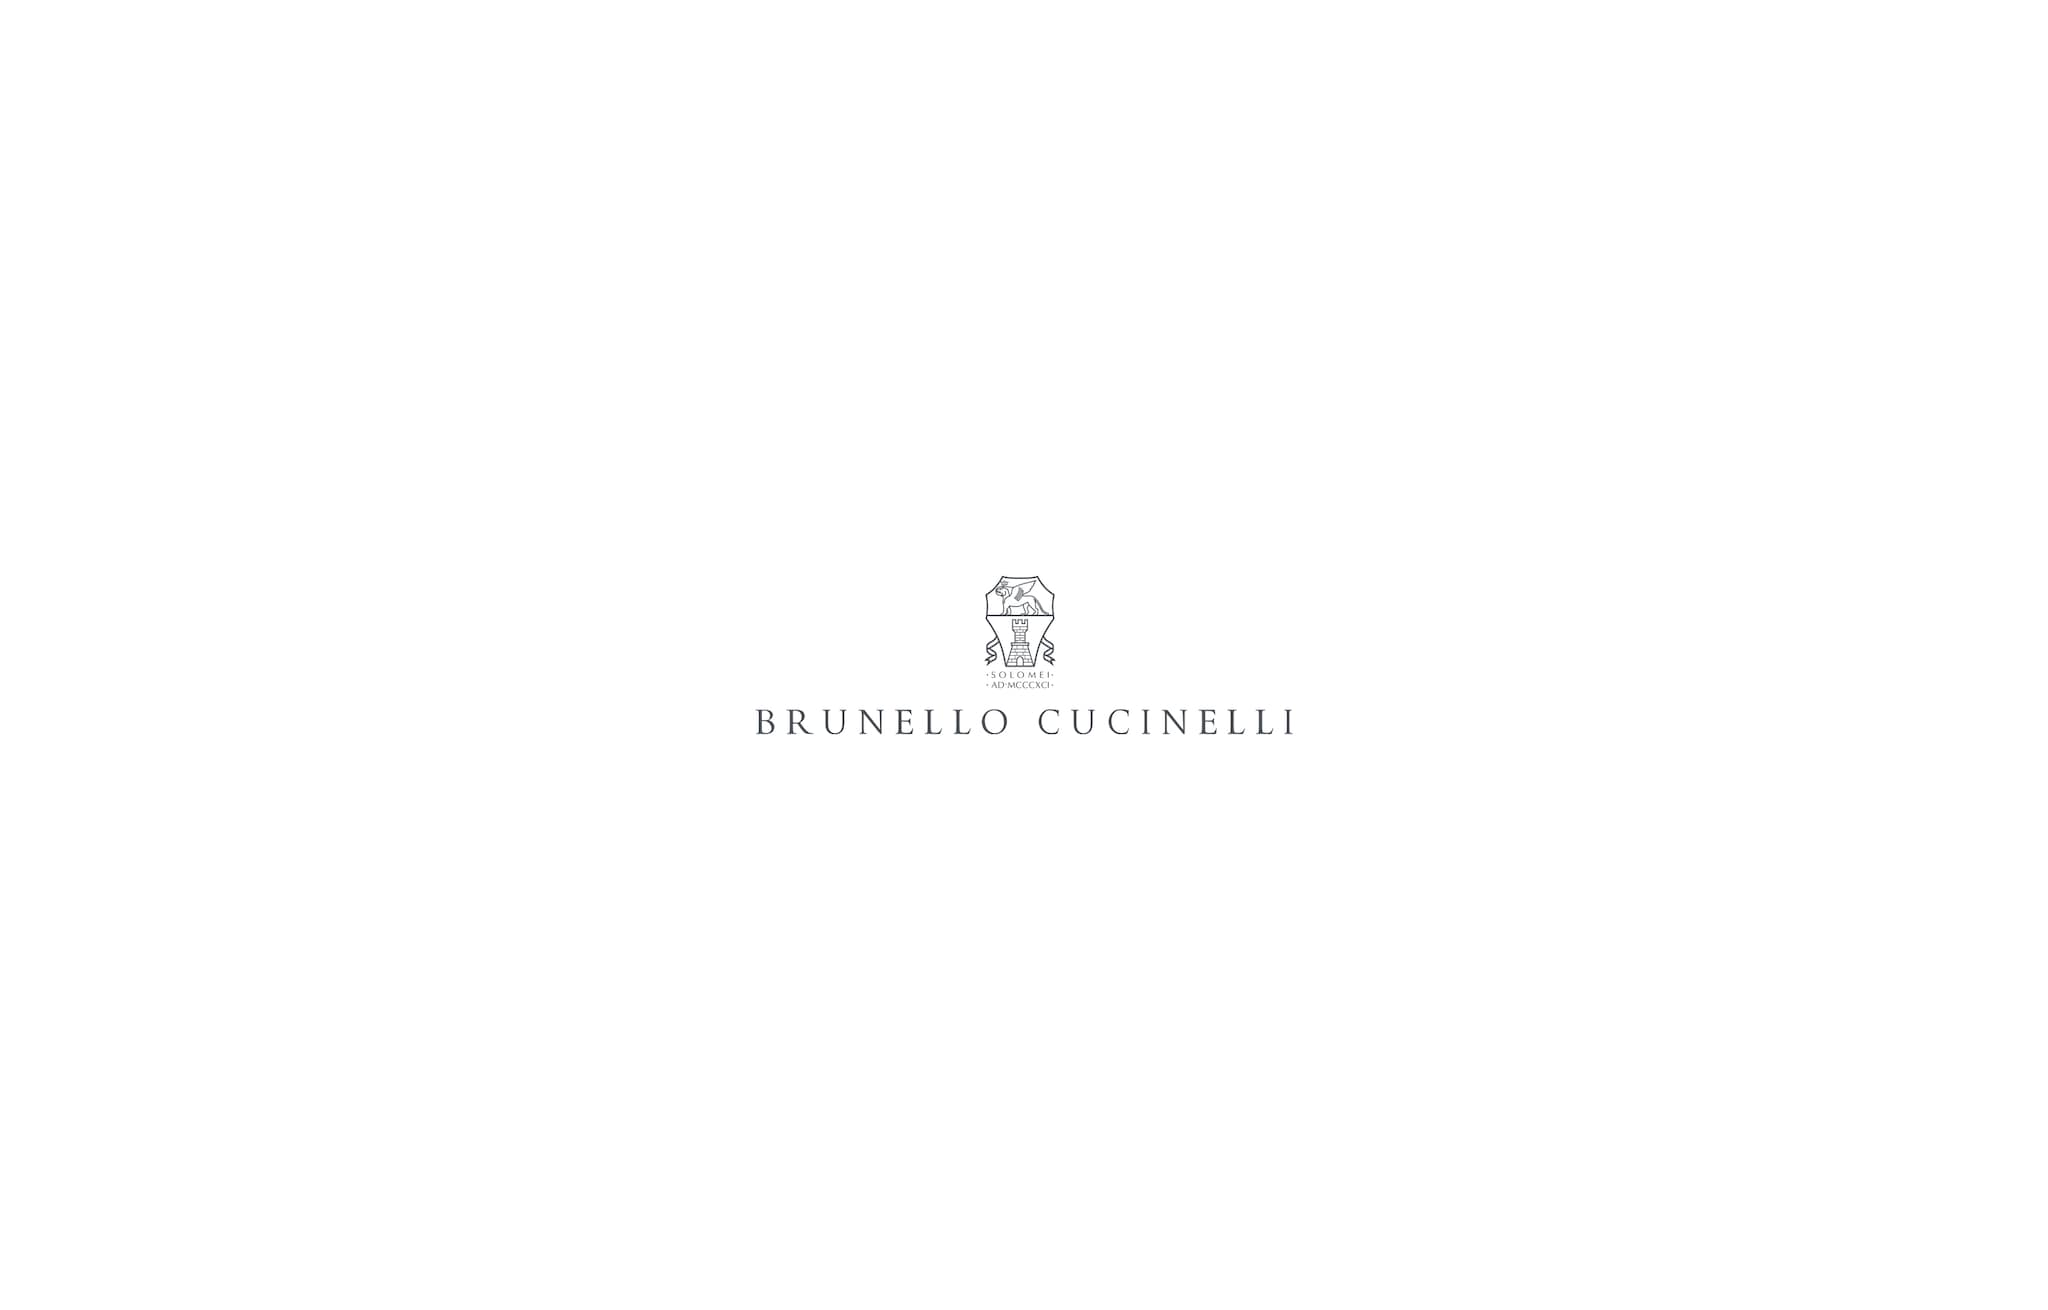 Cardigan Net null Femme - Brunello Cucinelli